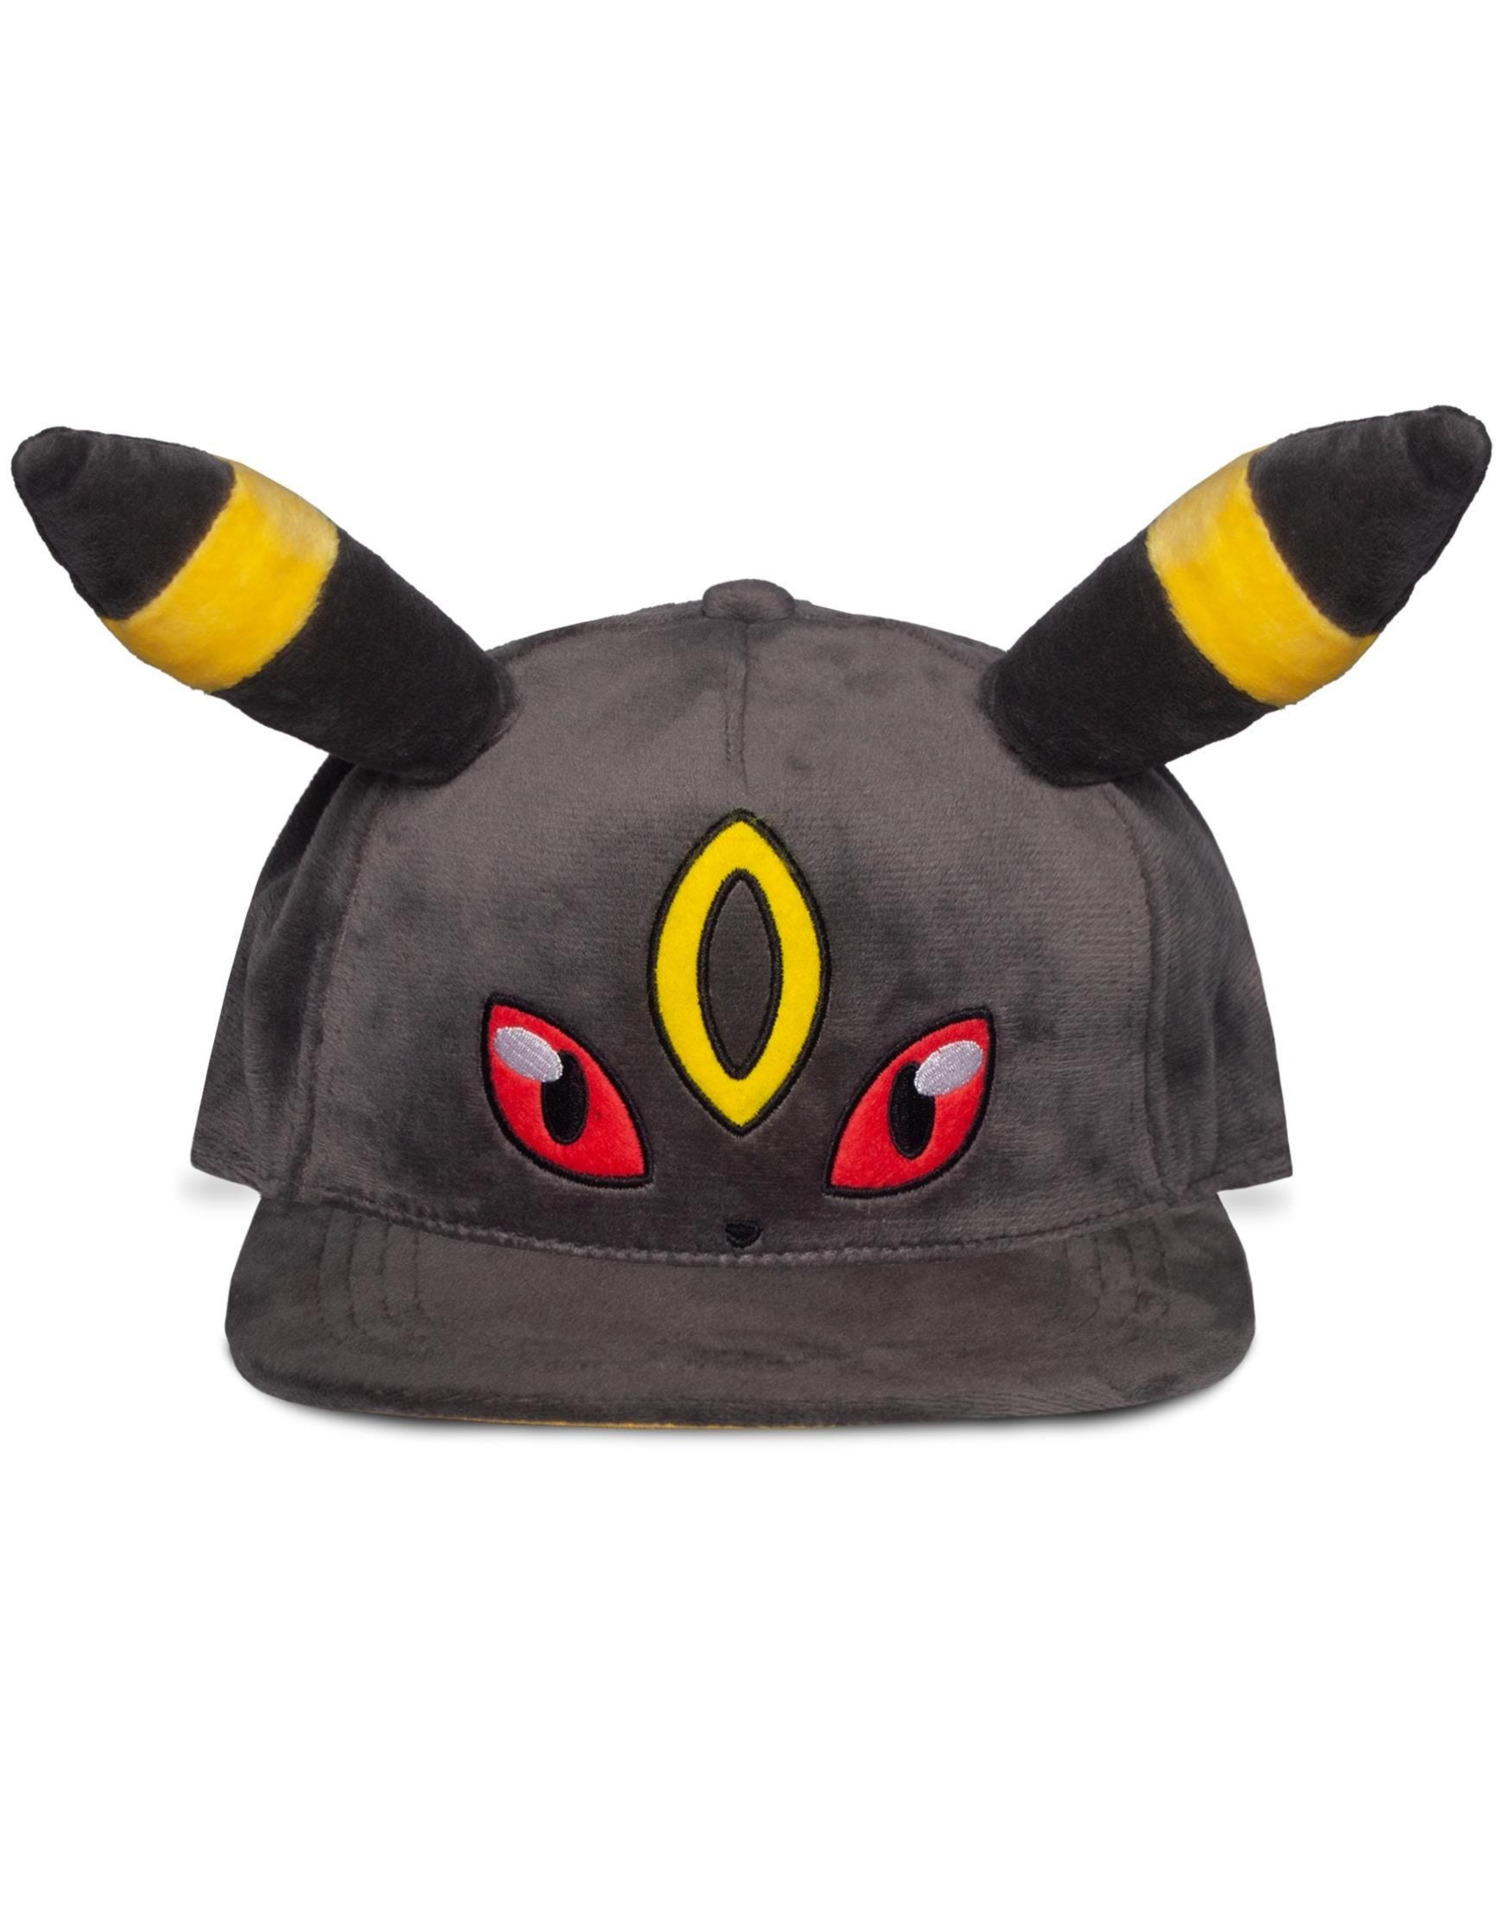 Kšiltovka Pokémon - Umbreon Plush